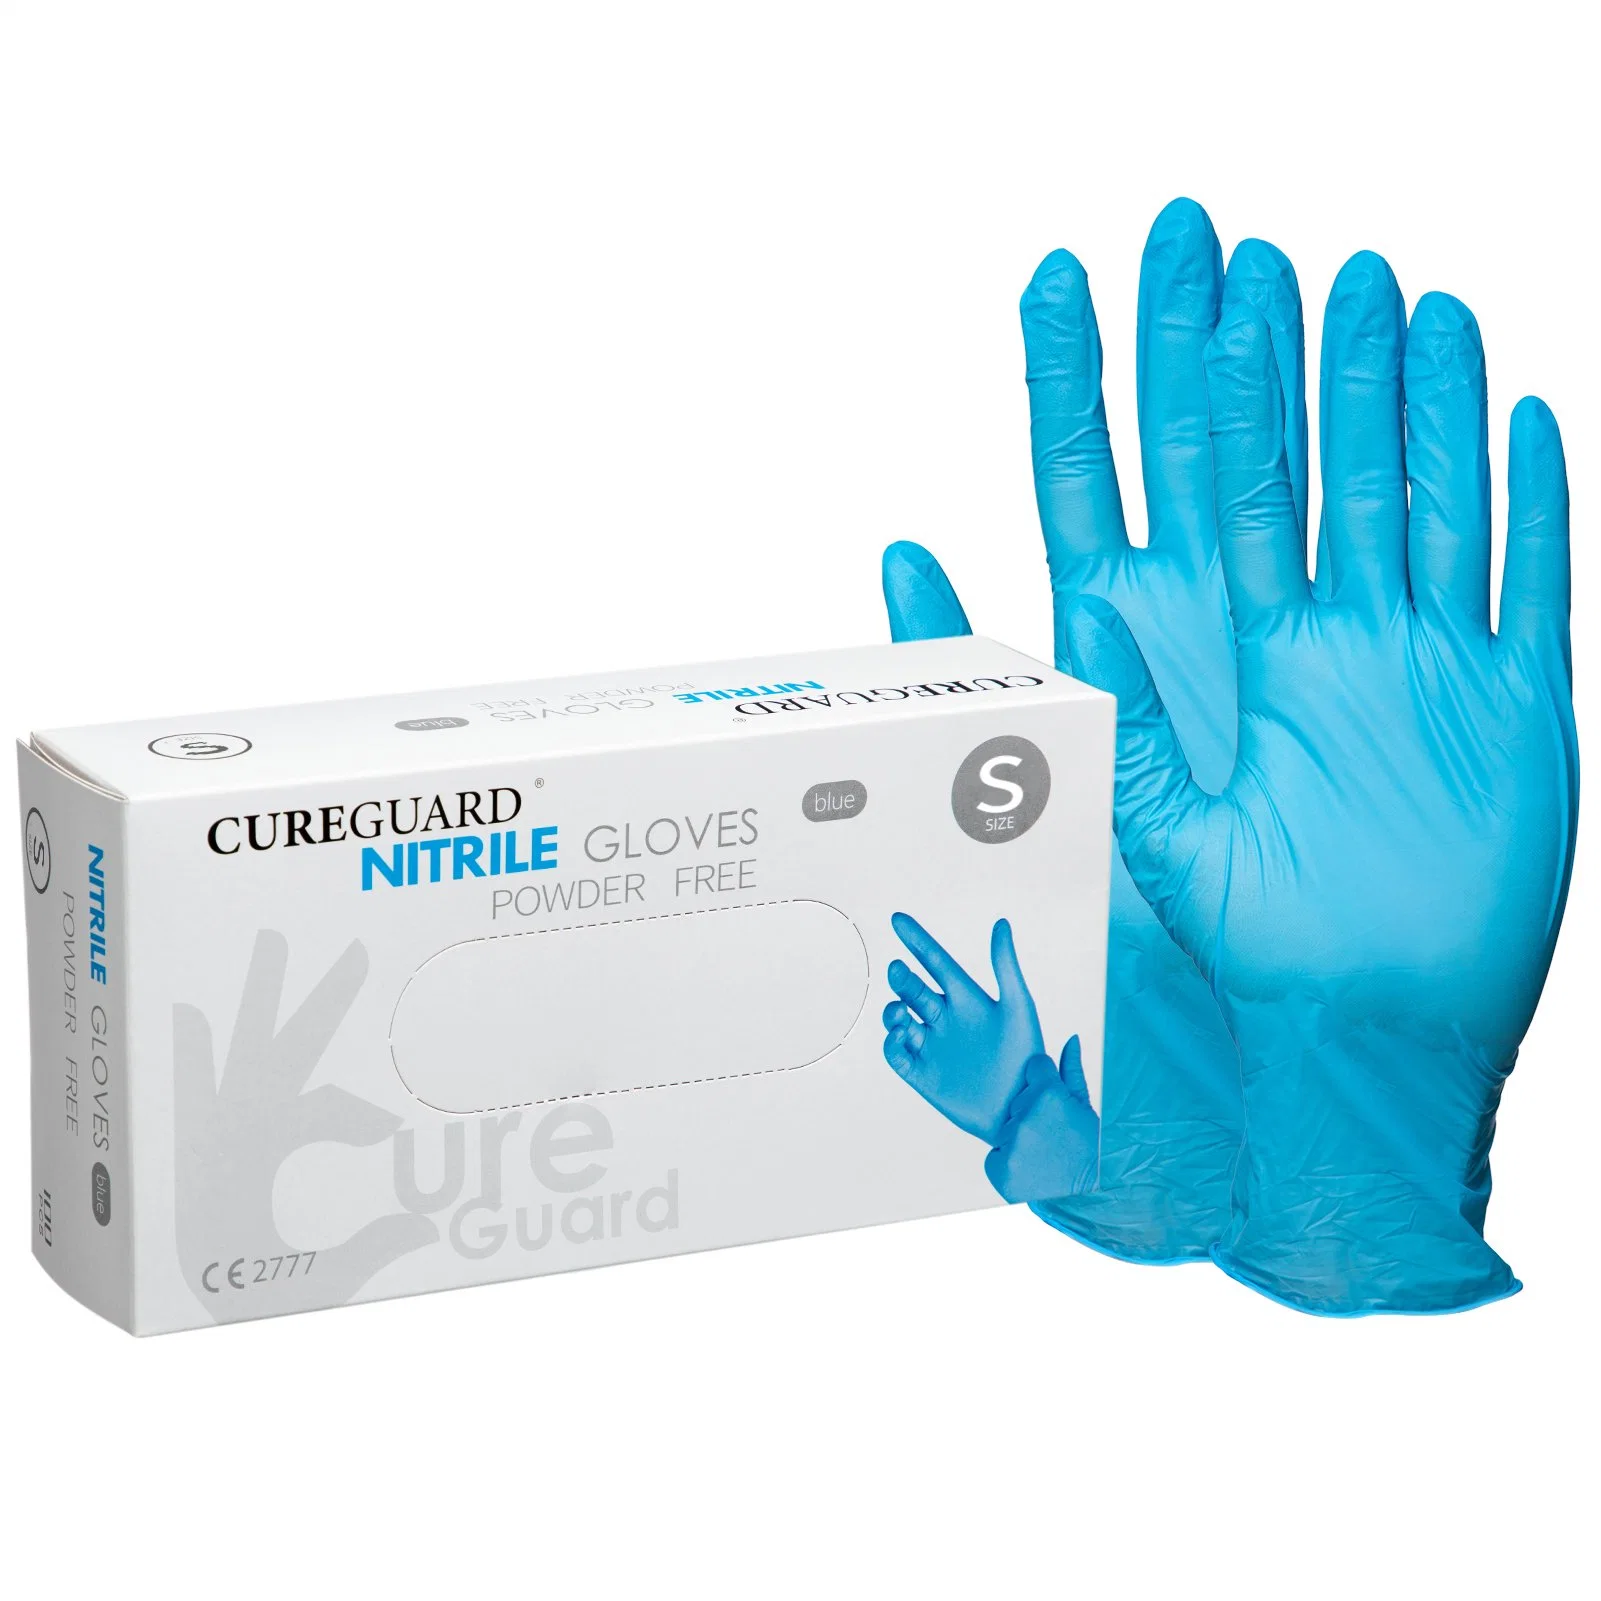 FDA Cerificated Medical Examination polvo libre Azul desechable guante nitrilo Sin polvo